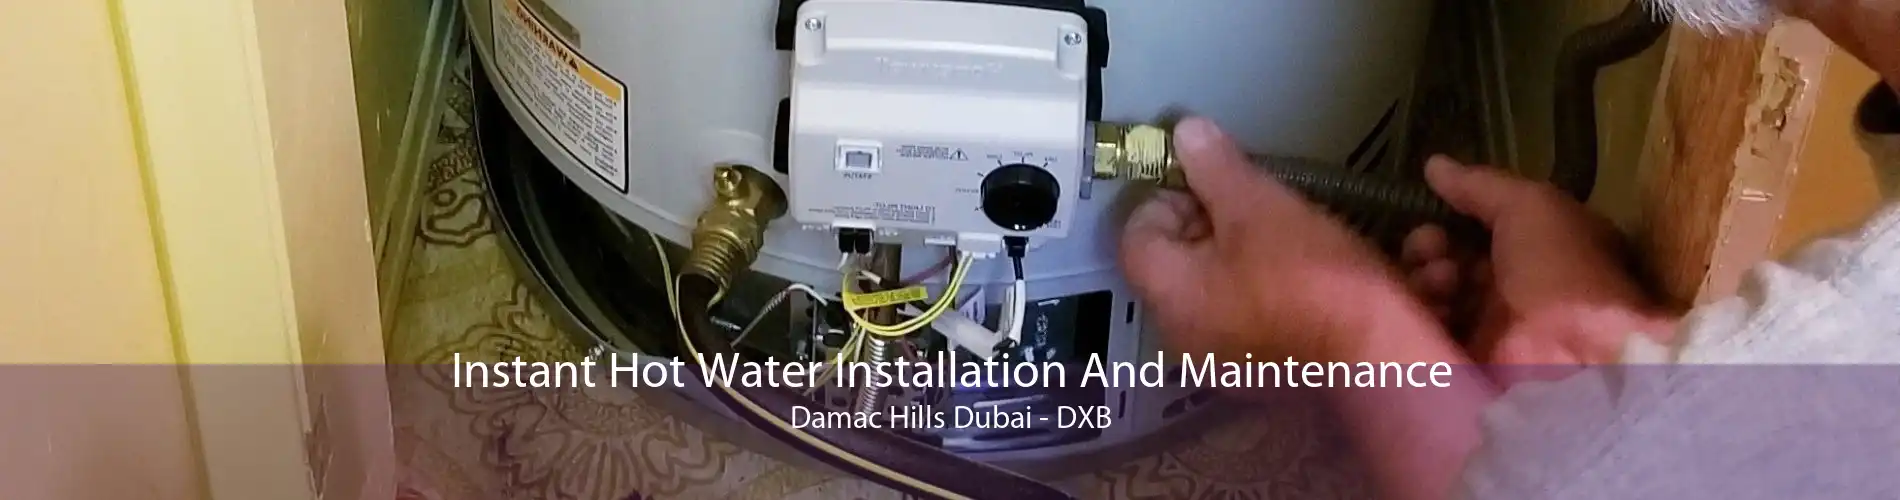 Instant Hot Water Installation And Maintenance Damac Hills Dubai - DXB